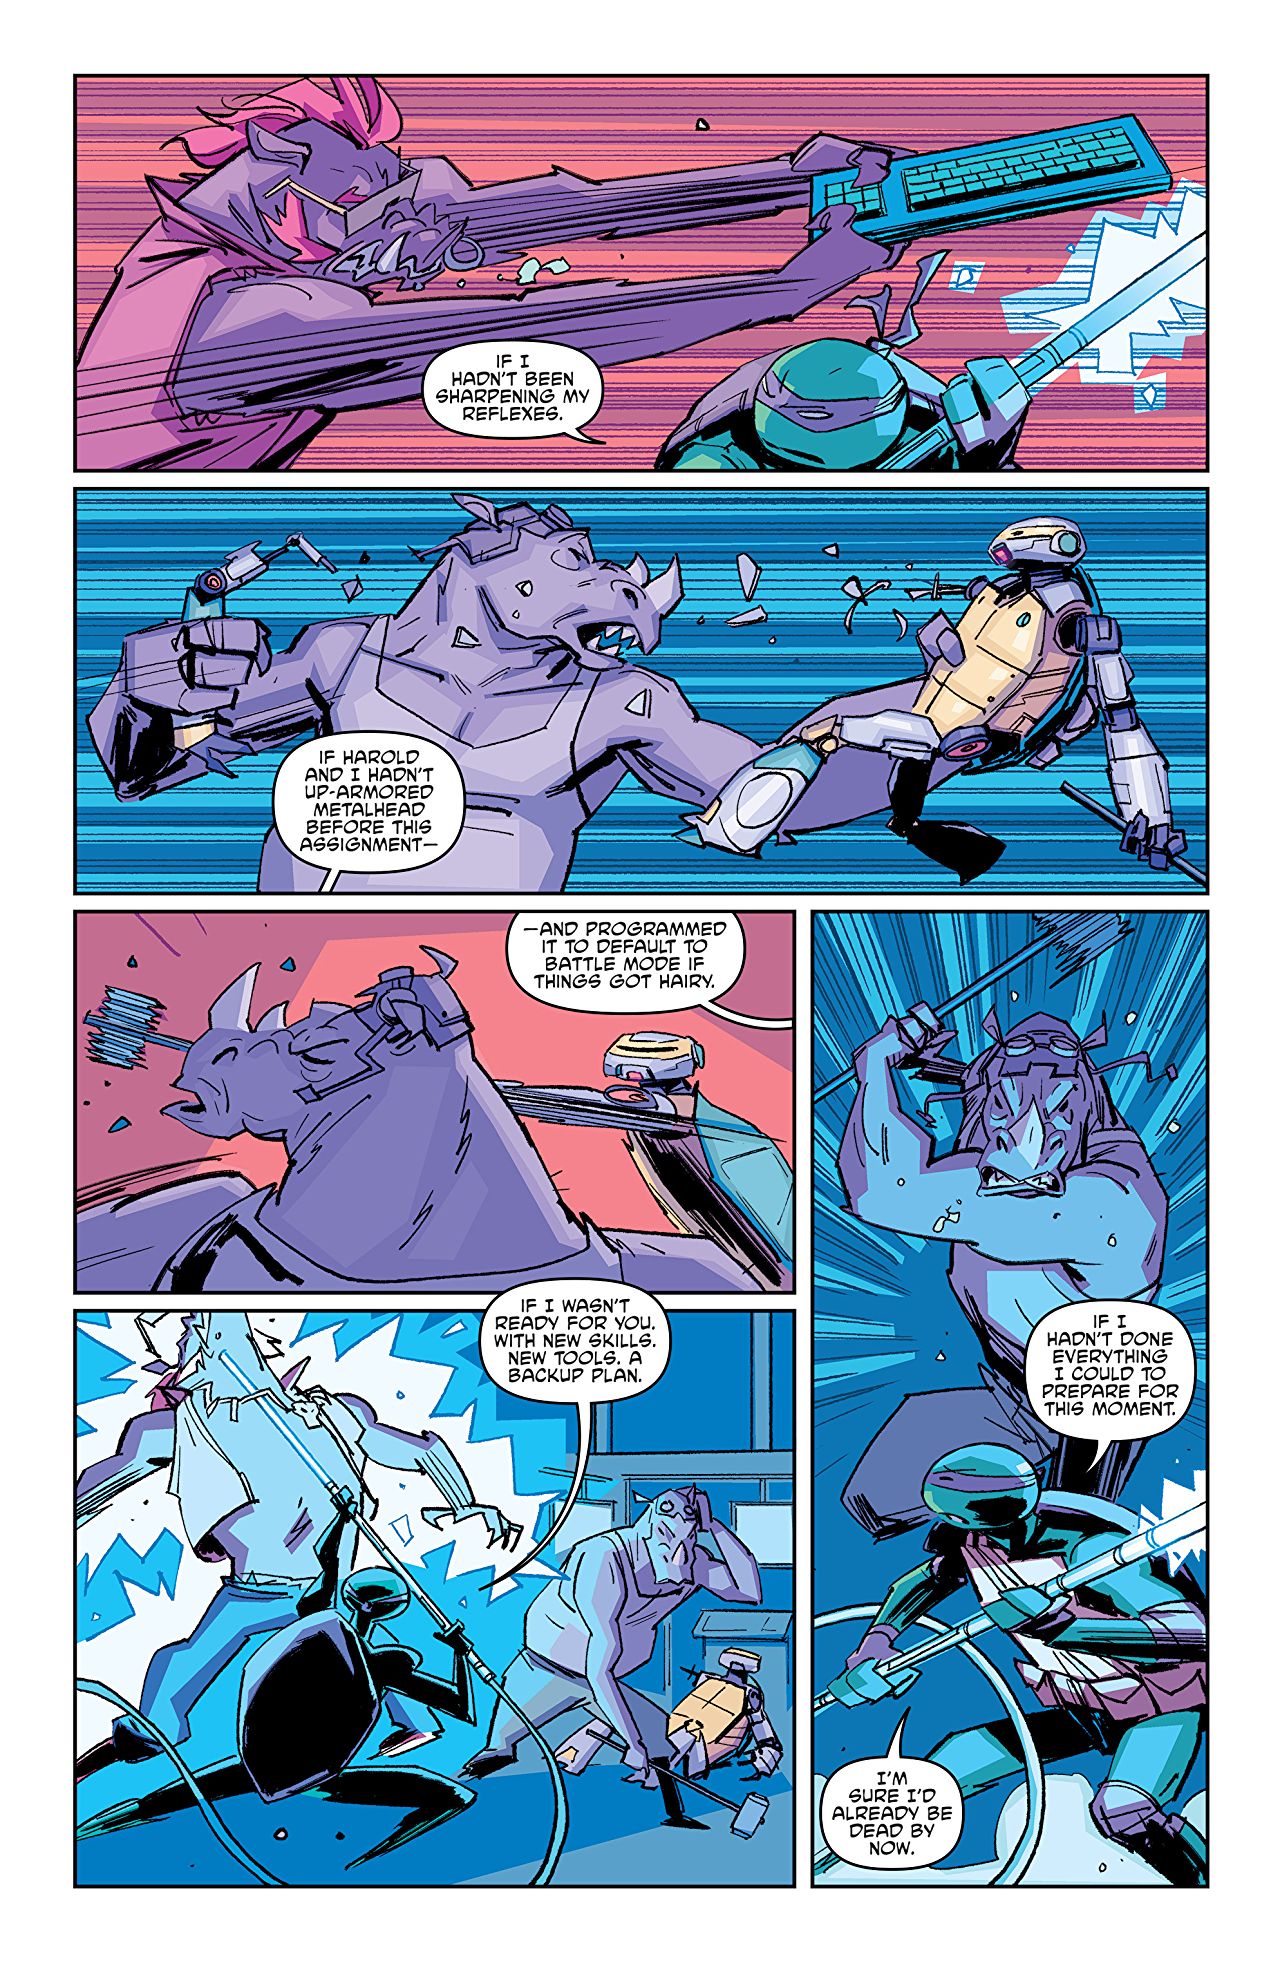 Details about   Teenage Mutant Ninja Turtles Macro-Series #1-4 Run Of 4 Comic Books IDW Cover Bs 